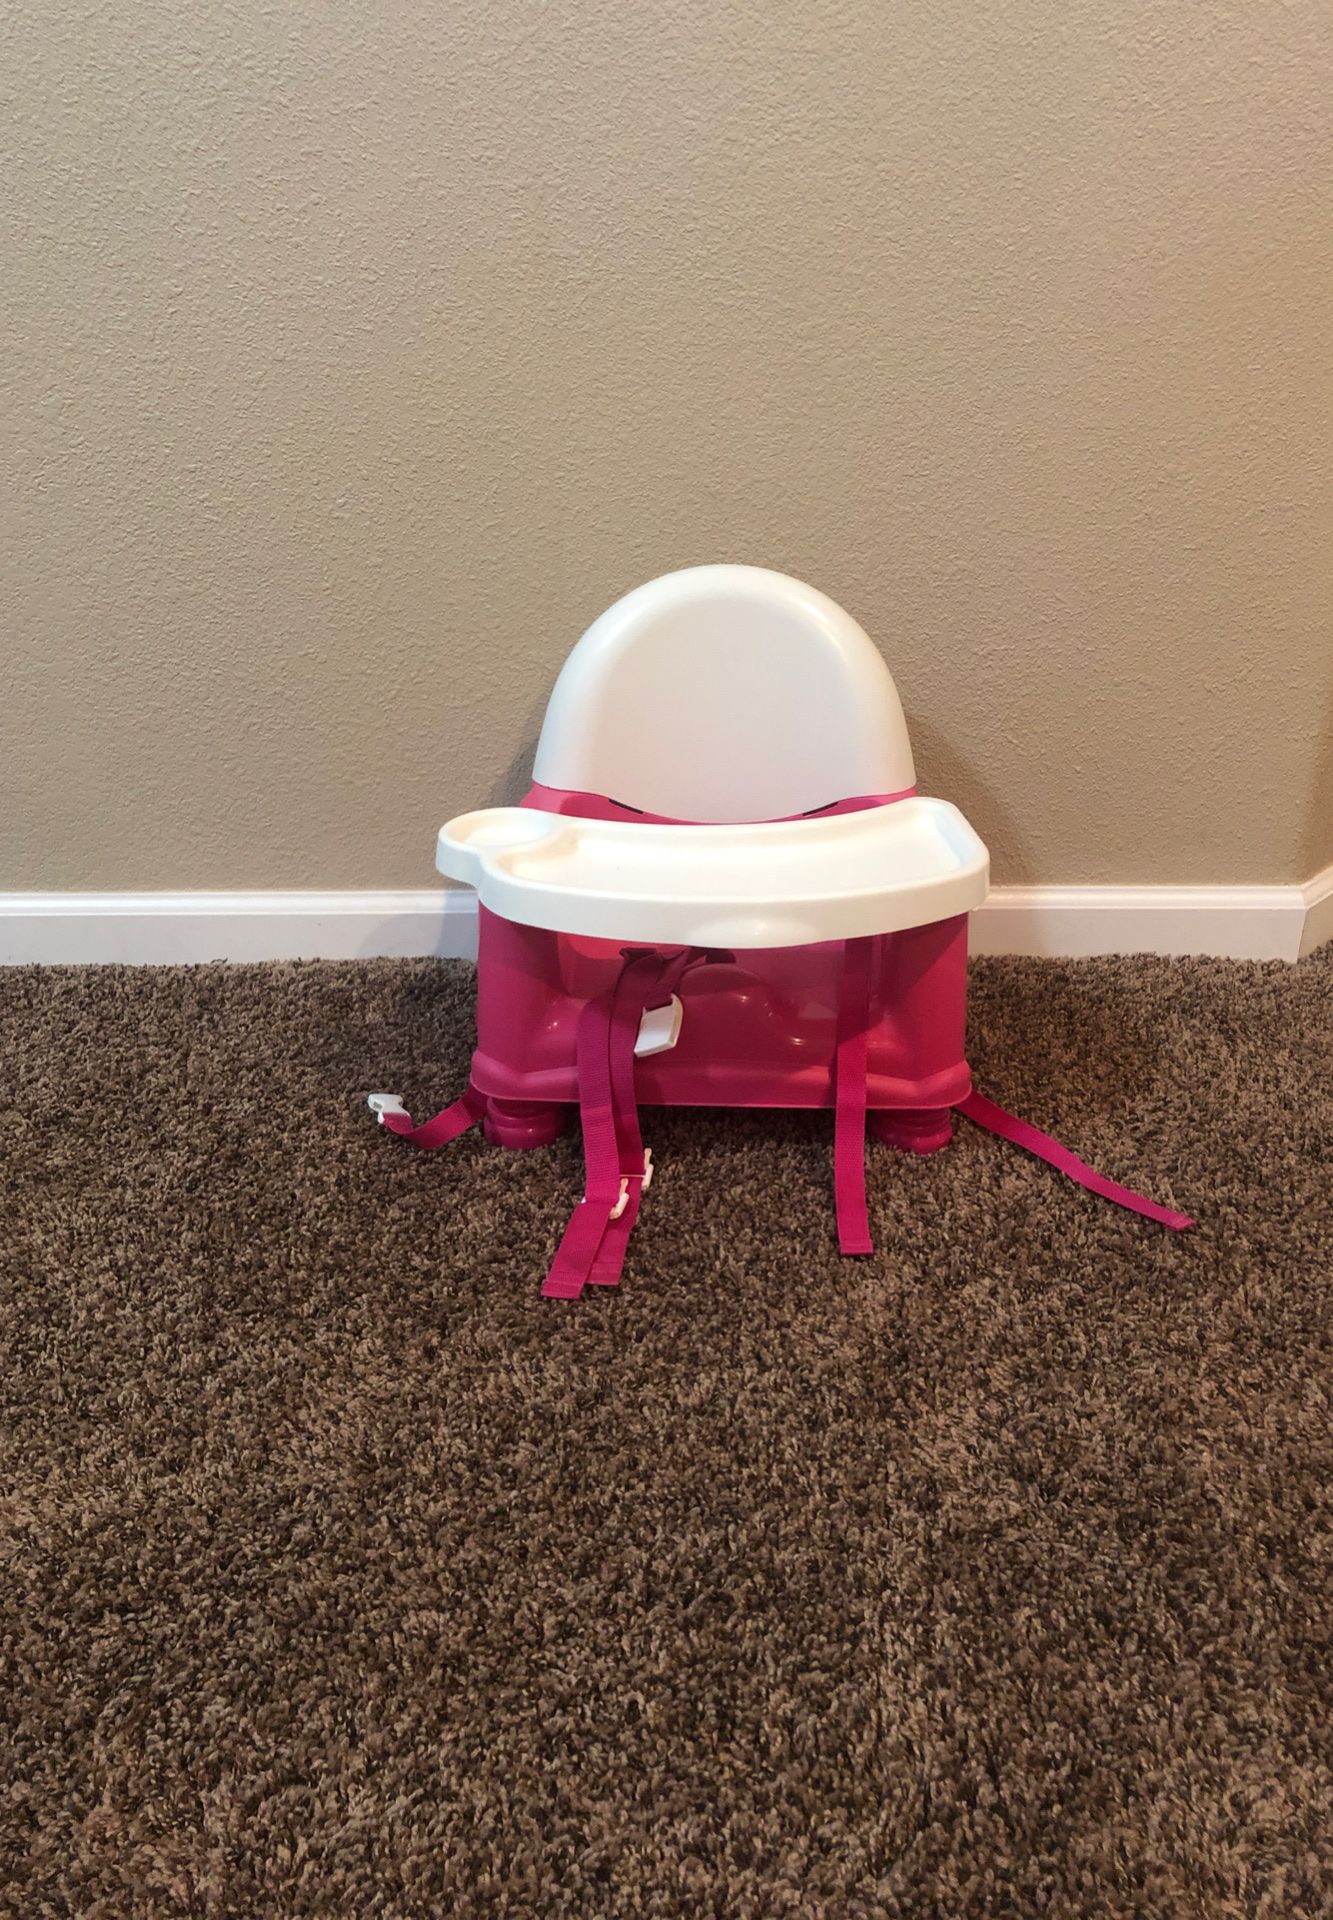 Baby/Toddler Booster Seat